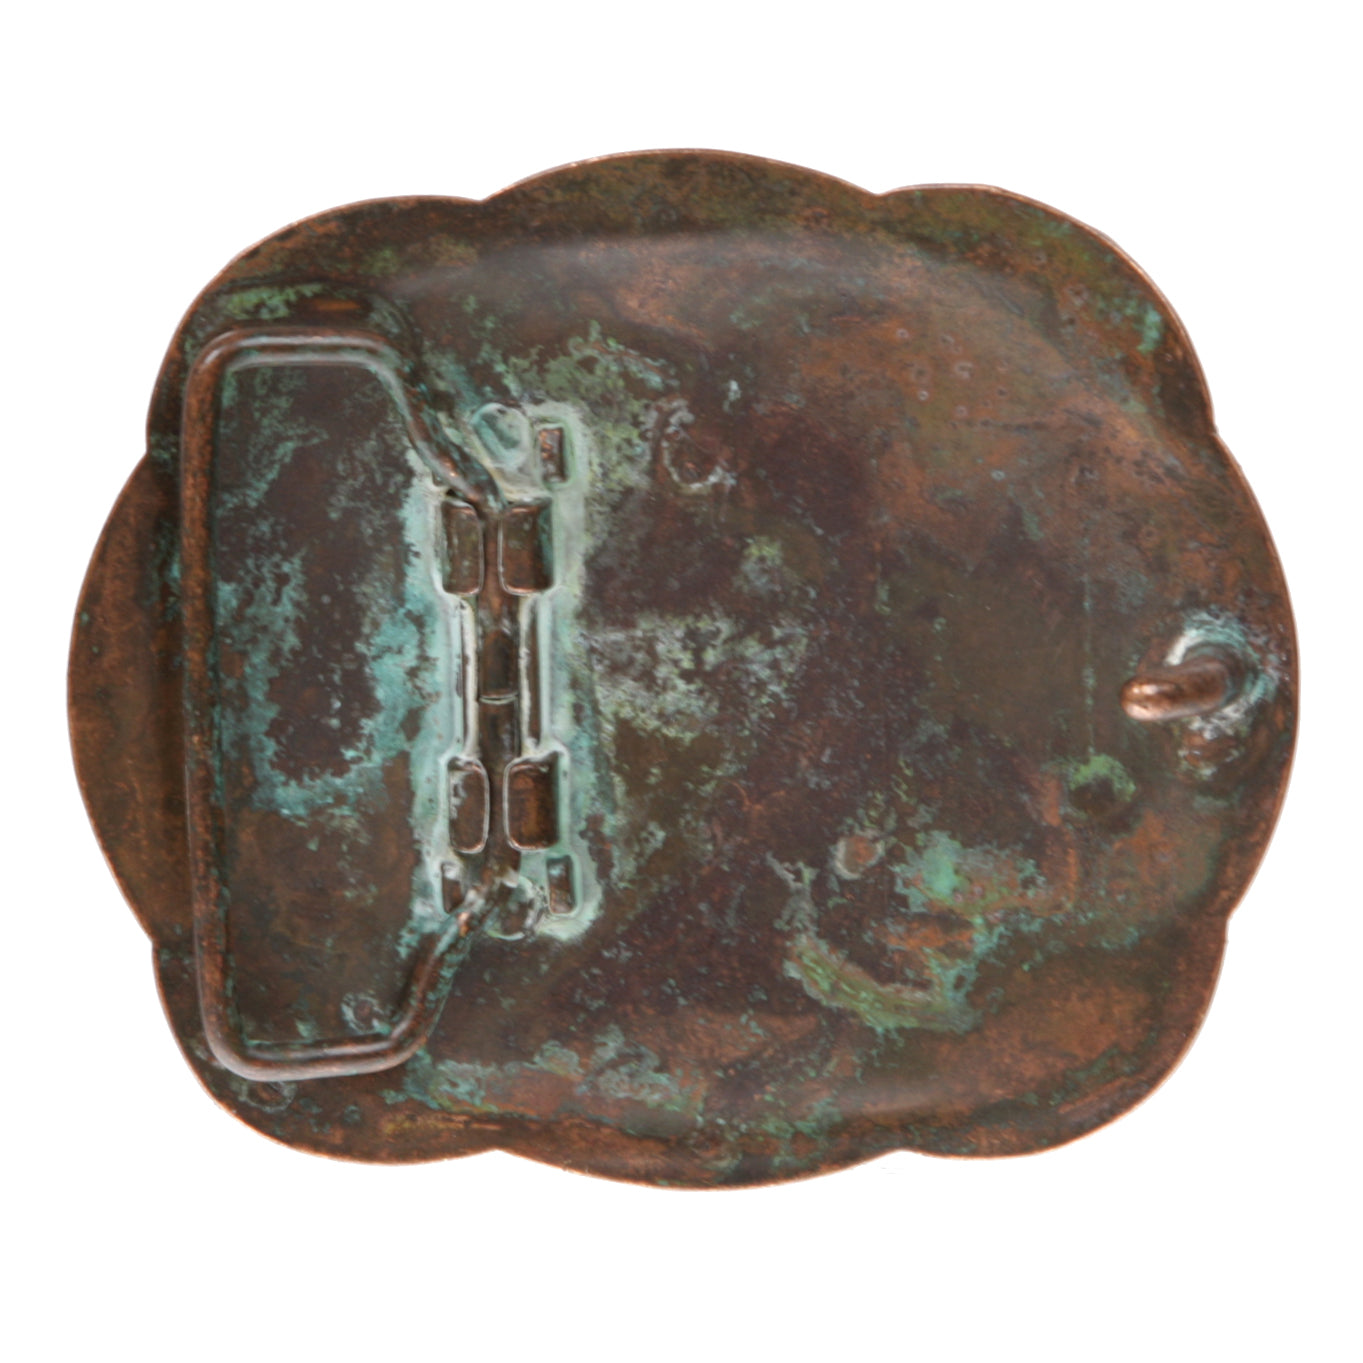 Western Vintage Brass Oval Belt Buckle with Patina on Random Spots